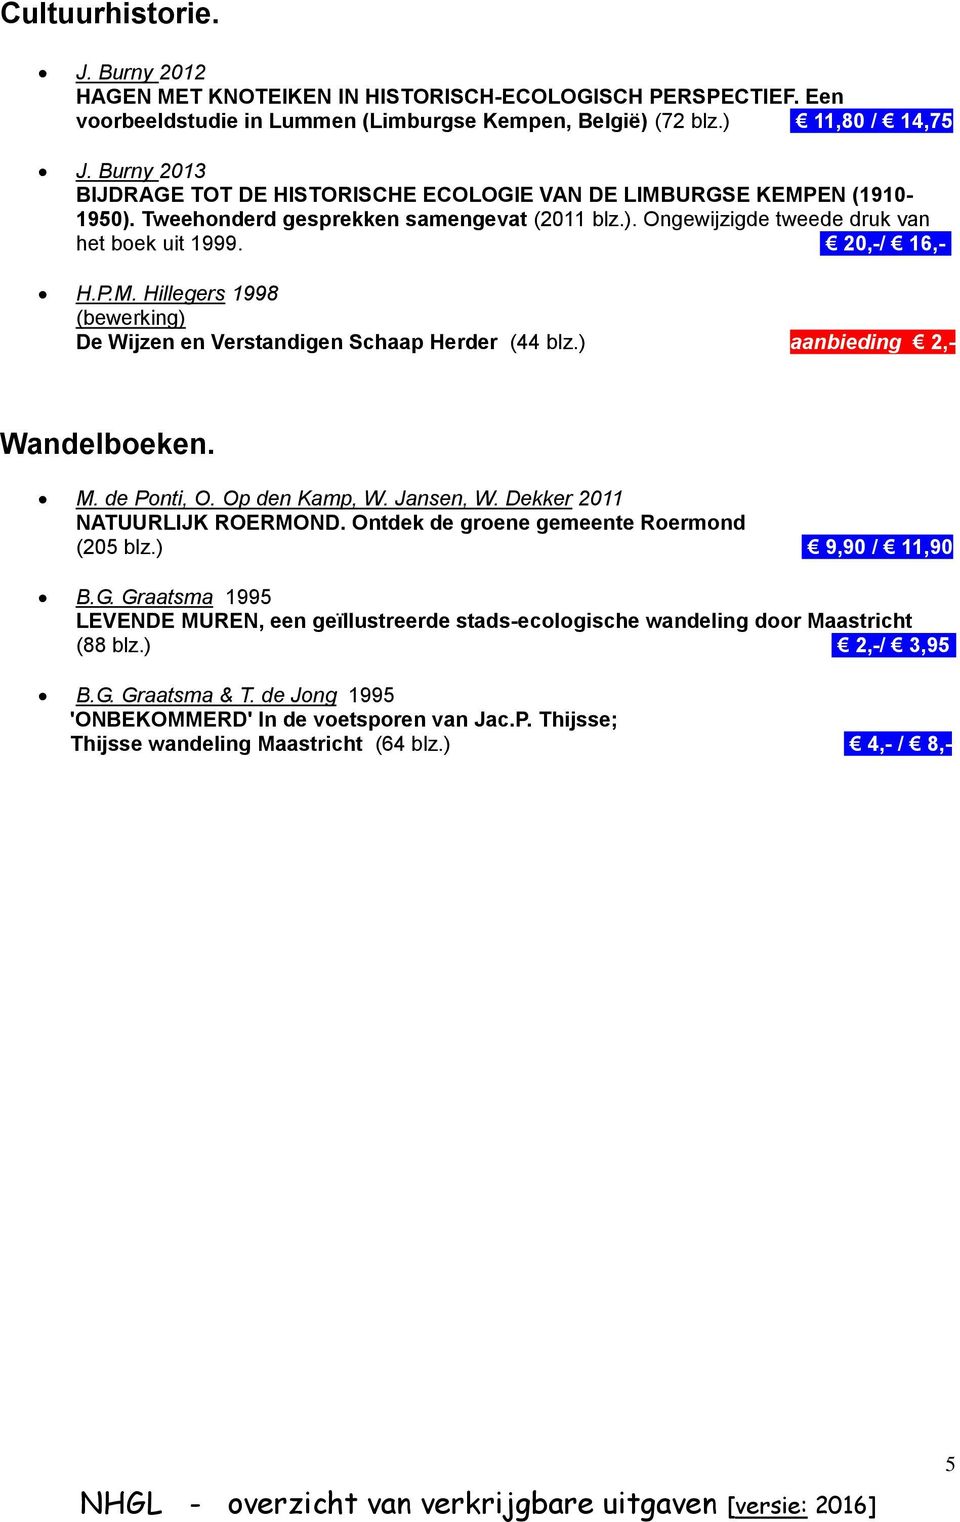 ) aanbieding 2,- Wandelboeken. M. de Ponti, O. Op den Kamp, W. Jansen, W. Dekker 2011 NATUURLIJK ROERMOND. Ontdek de groene gemeente Roermond (205 blz.). 9,90 / 11,90 B.G.